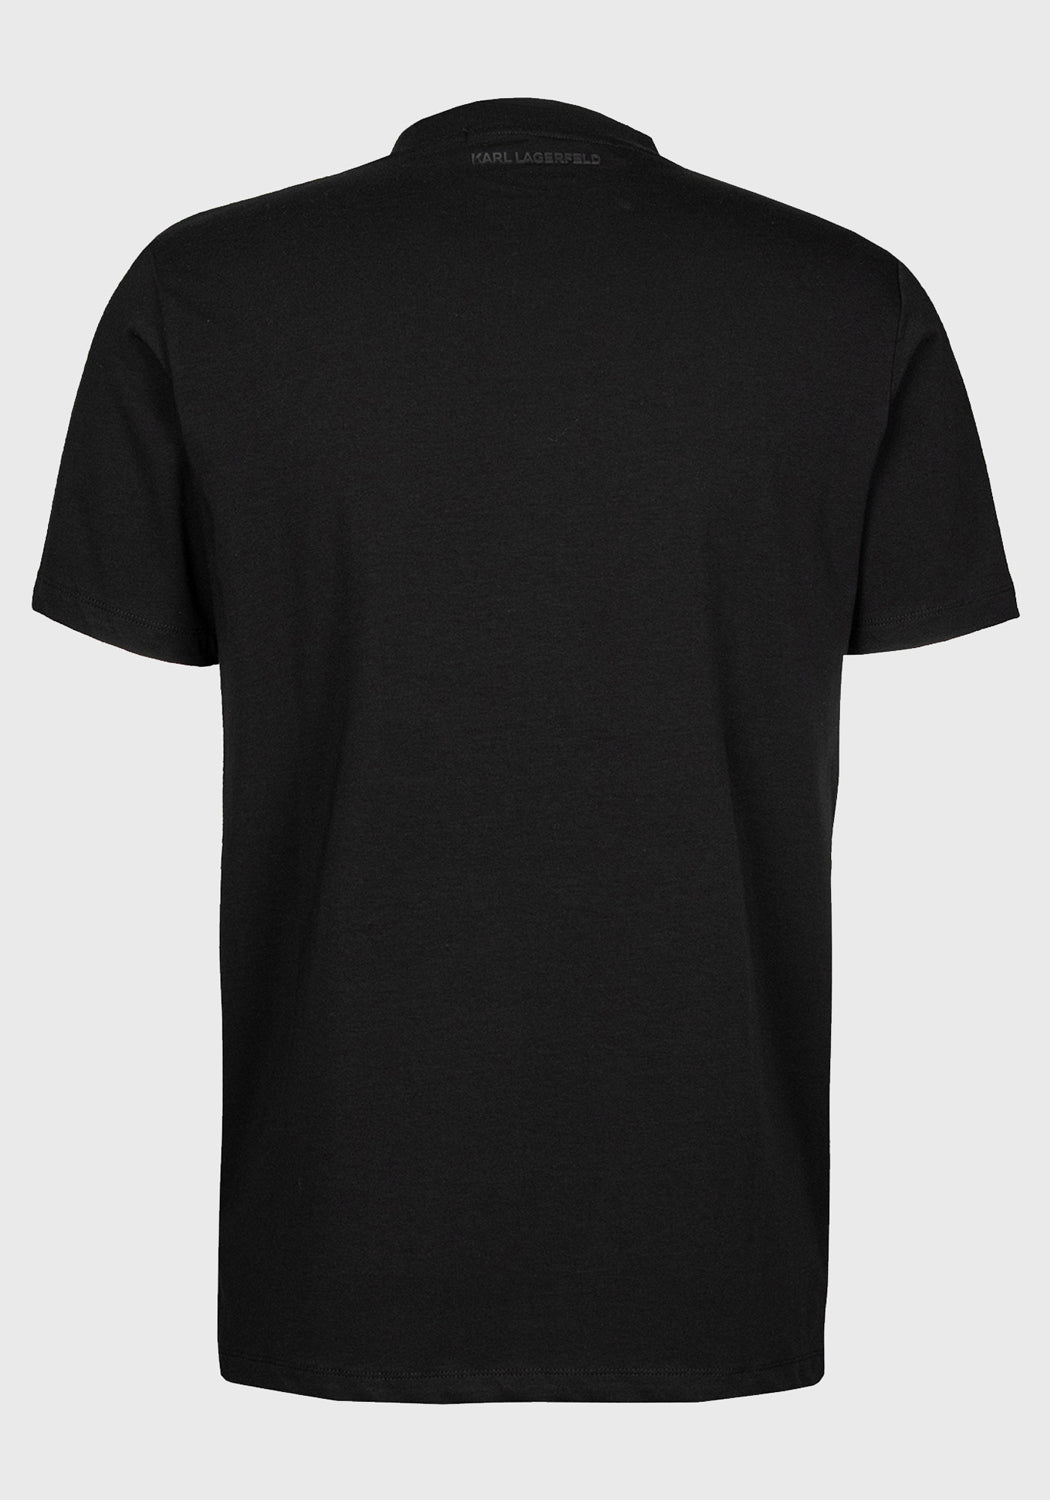 Karl Lagerfeld T Shirt Kl755038 Black Preto_shot2